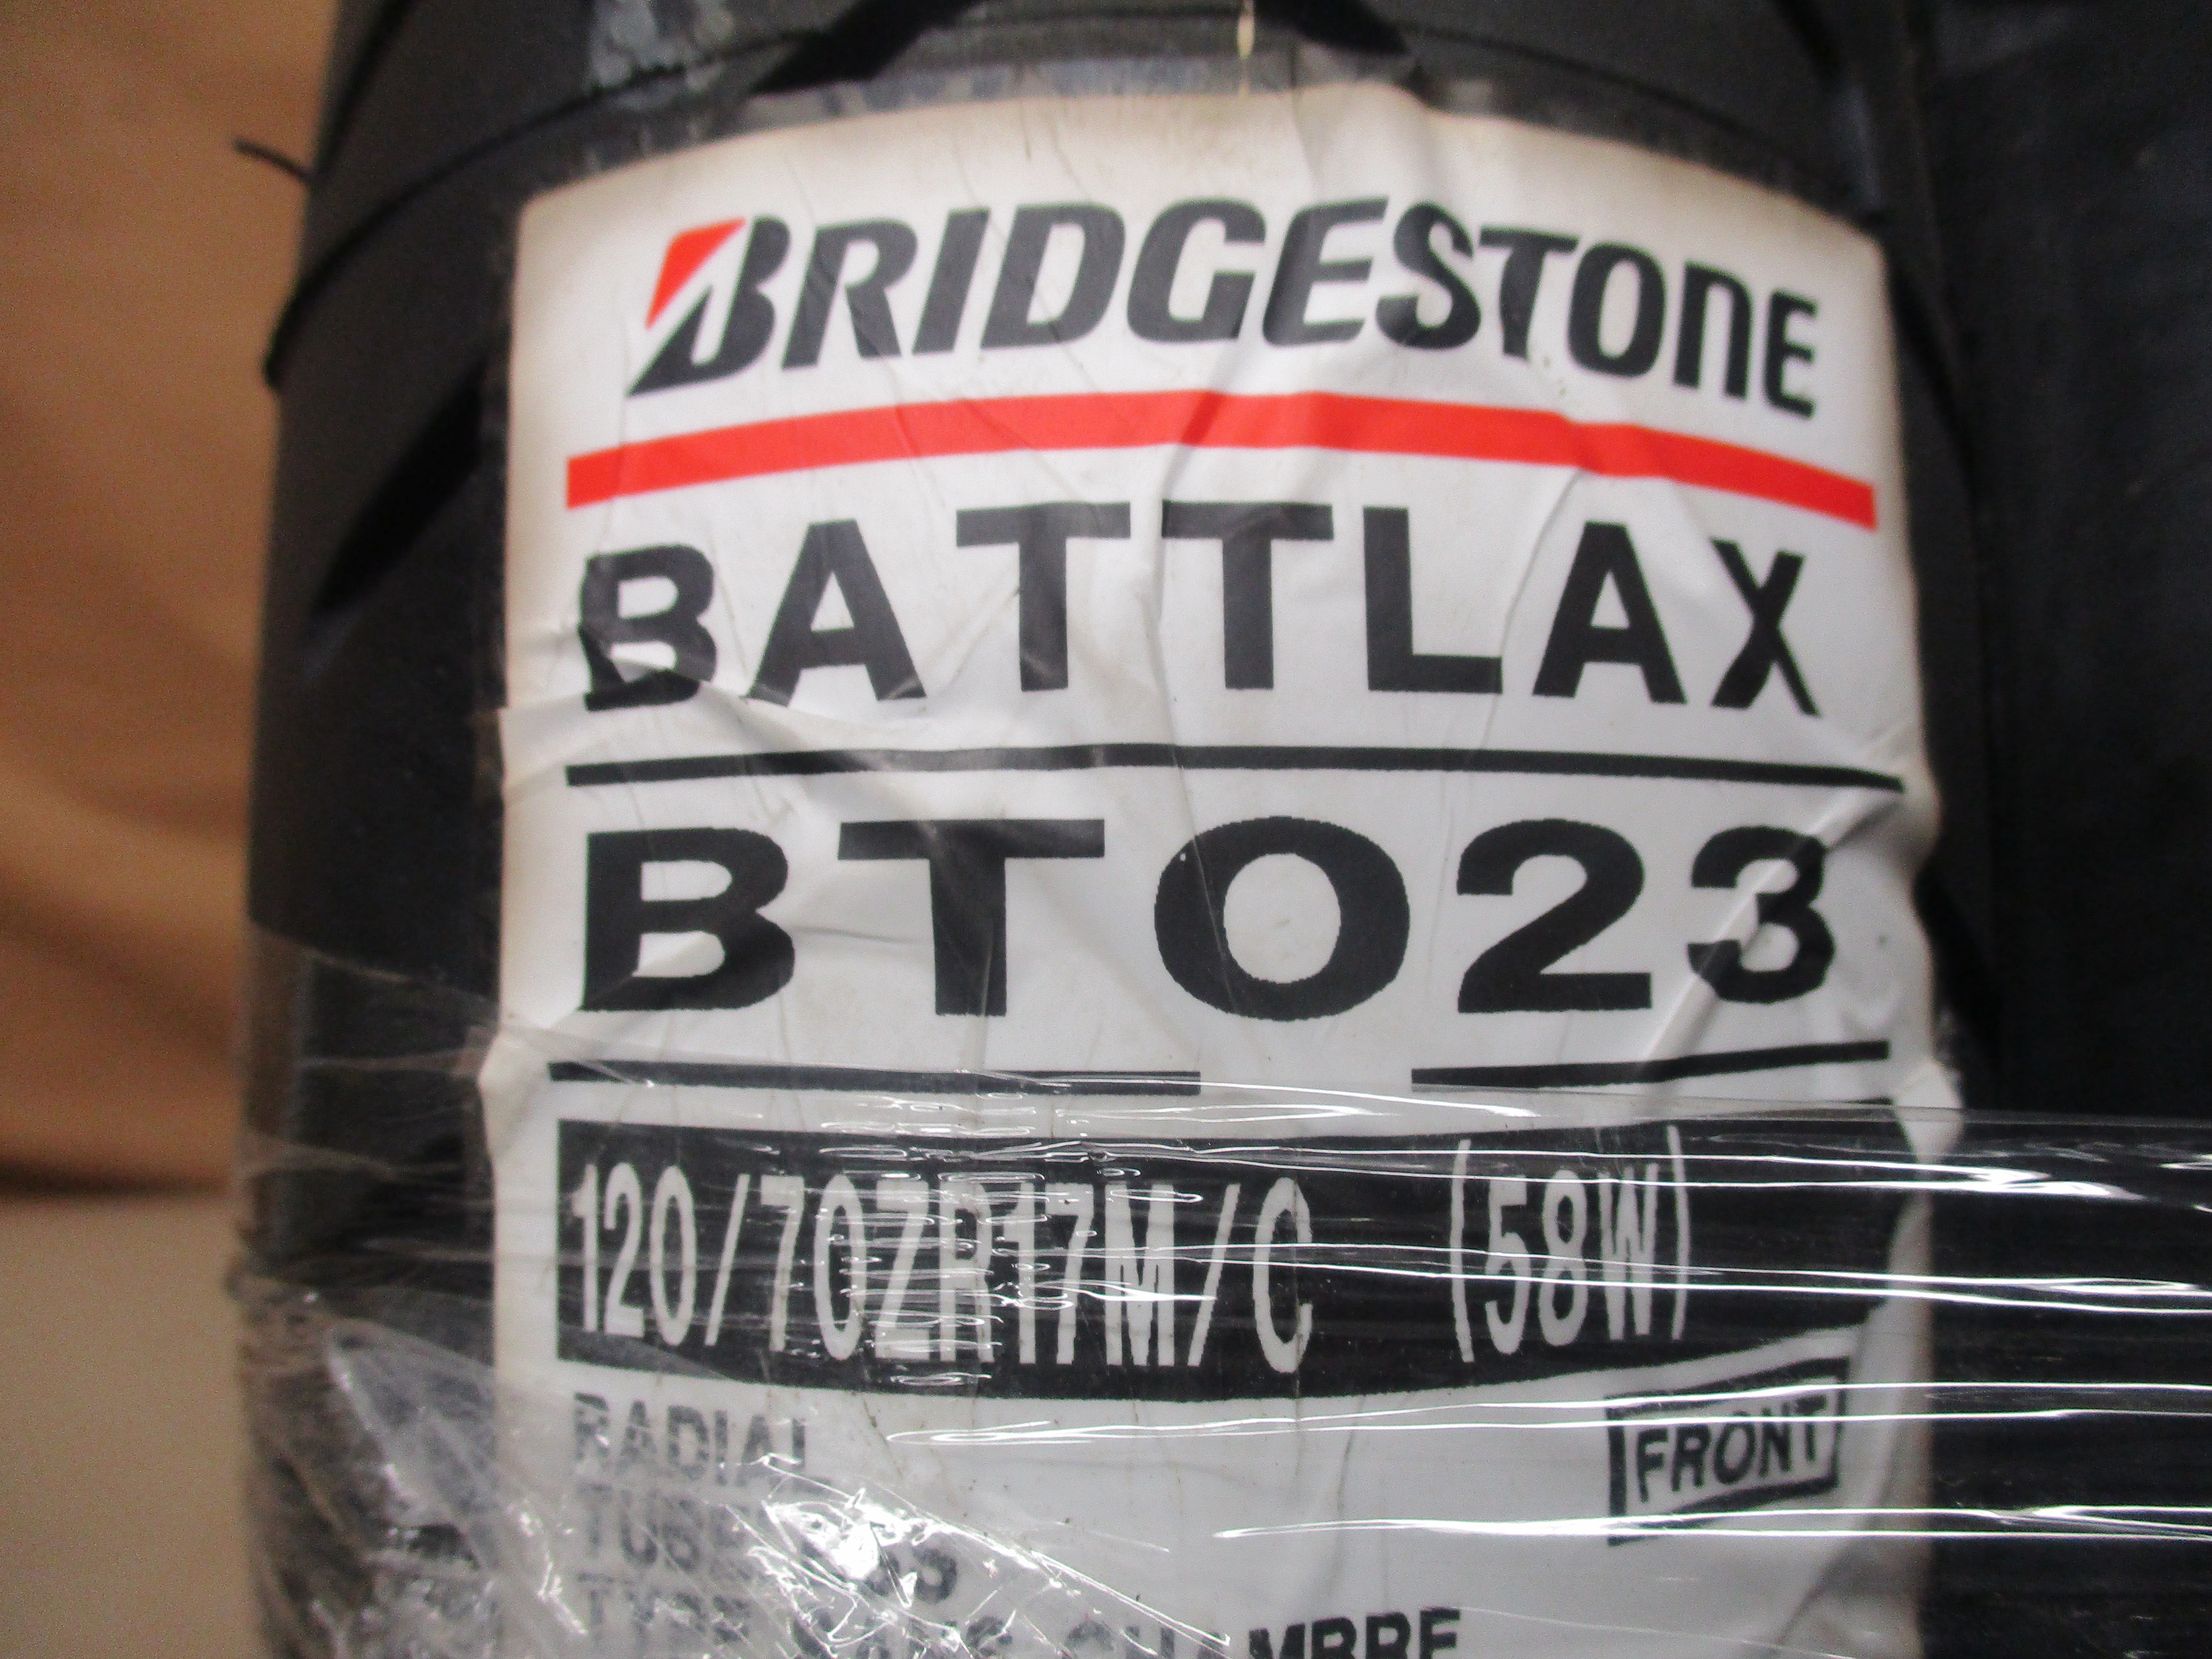 Bridgestone Tire set